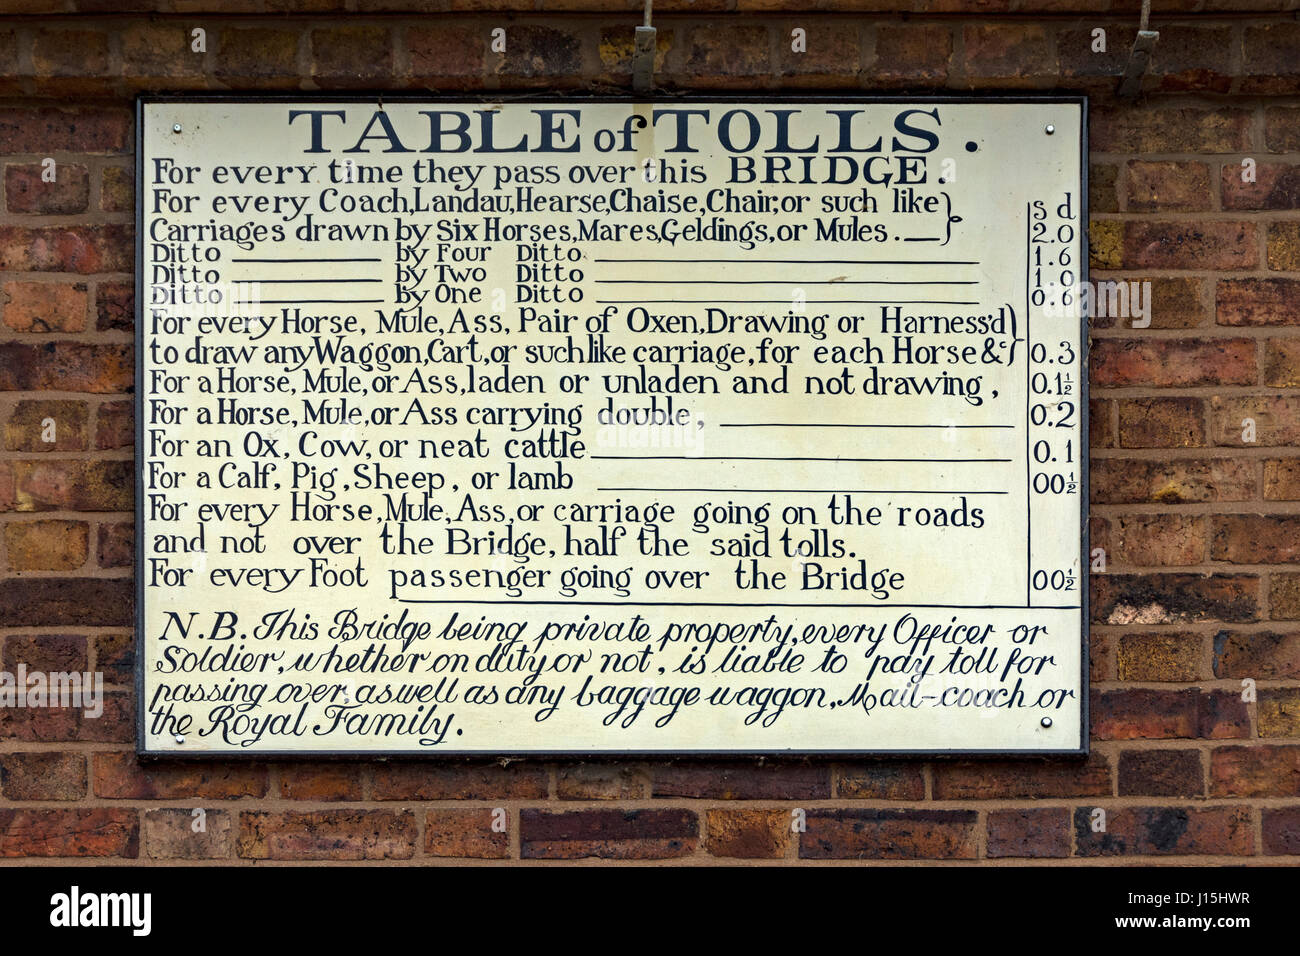 Sign showing a list of tolls for the Iron Bridge, opened 1781, Ironbridge Gorge, Shropshire, England, UK. Stock Photo